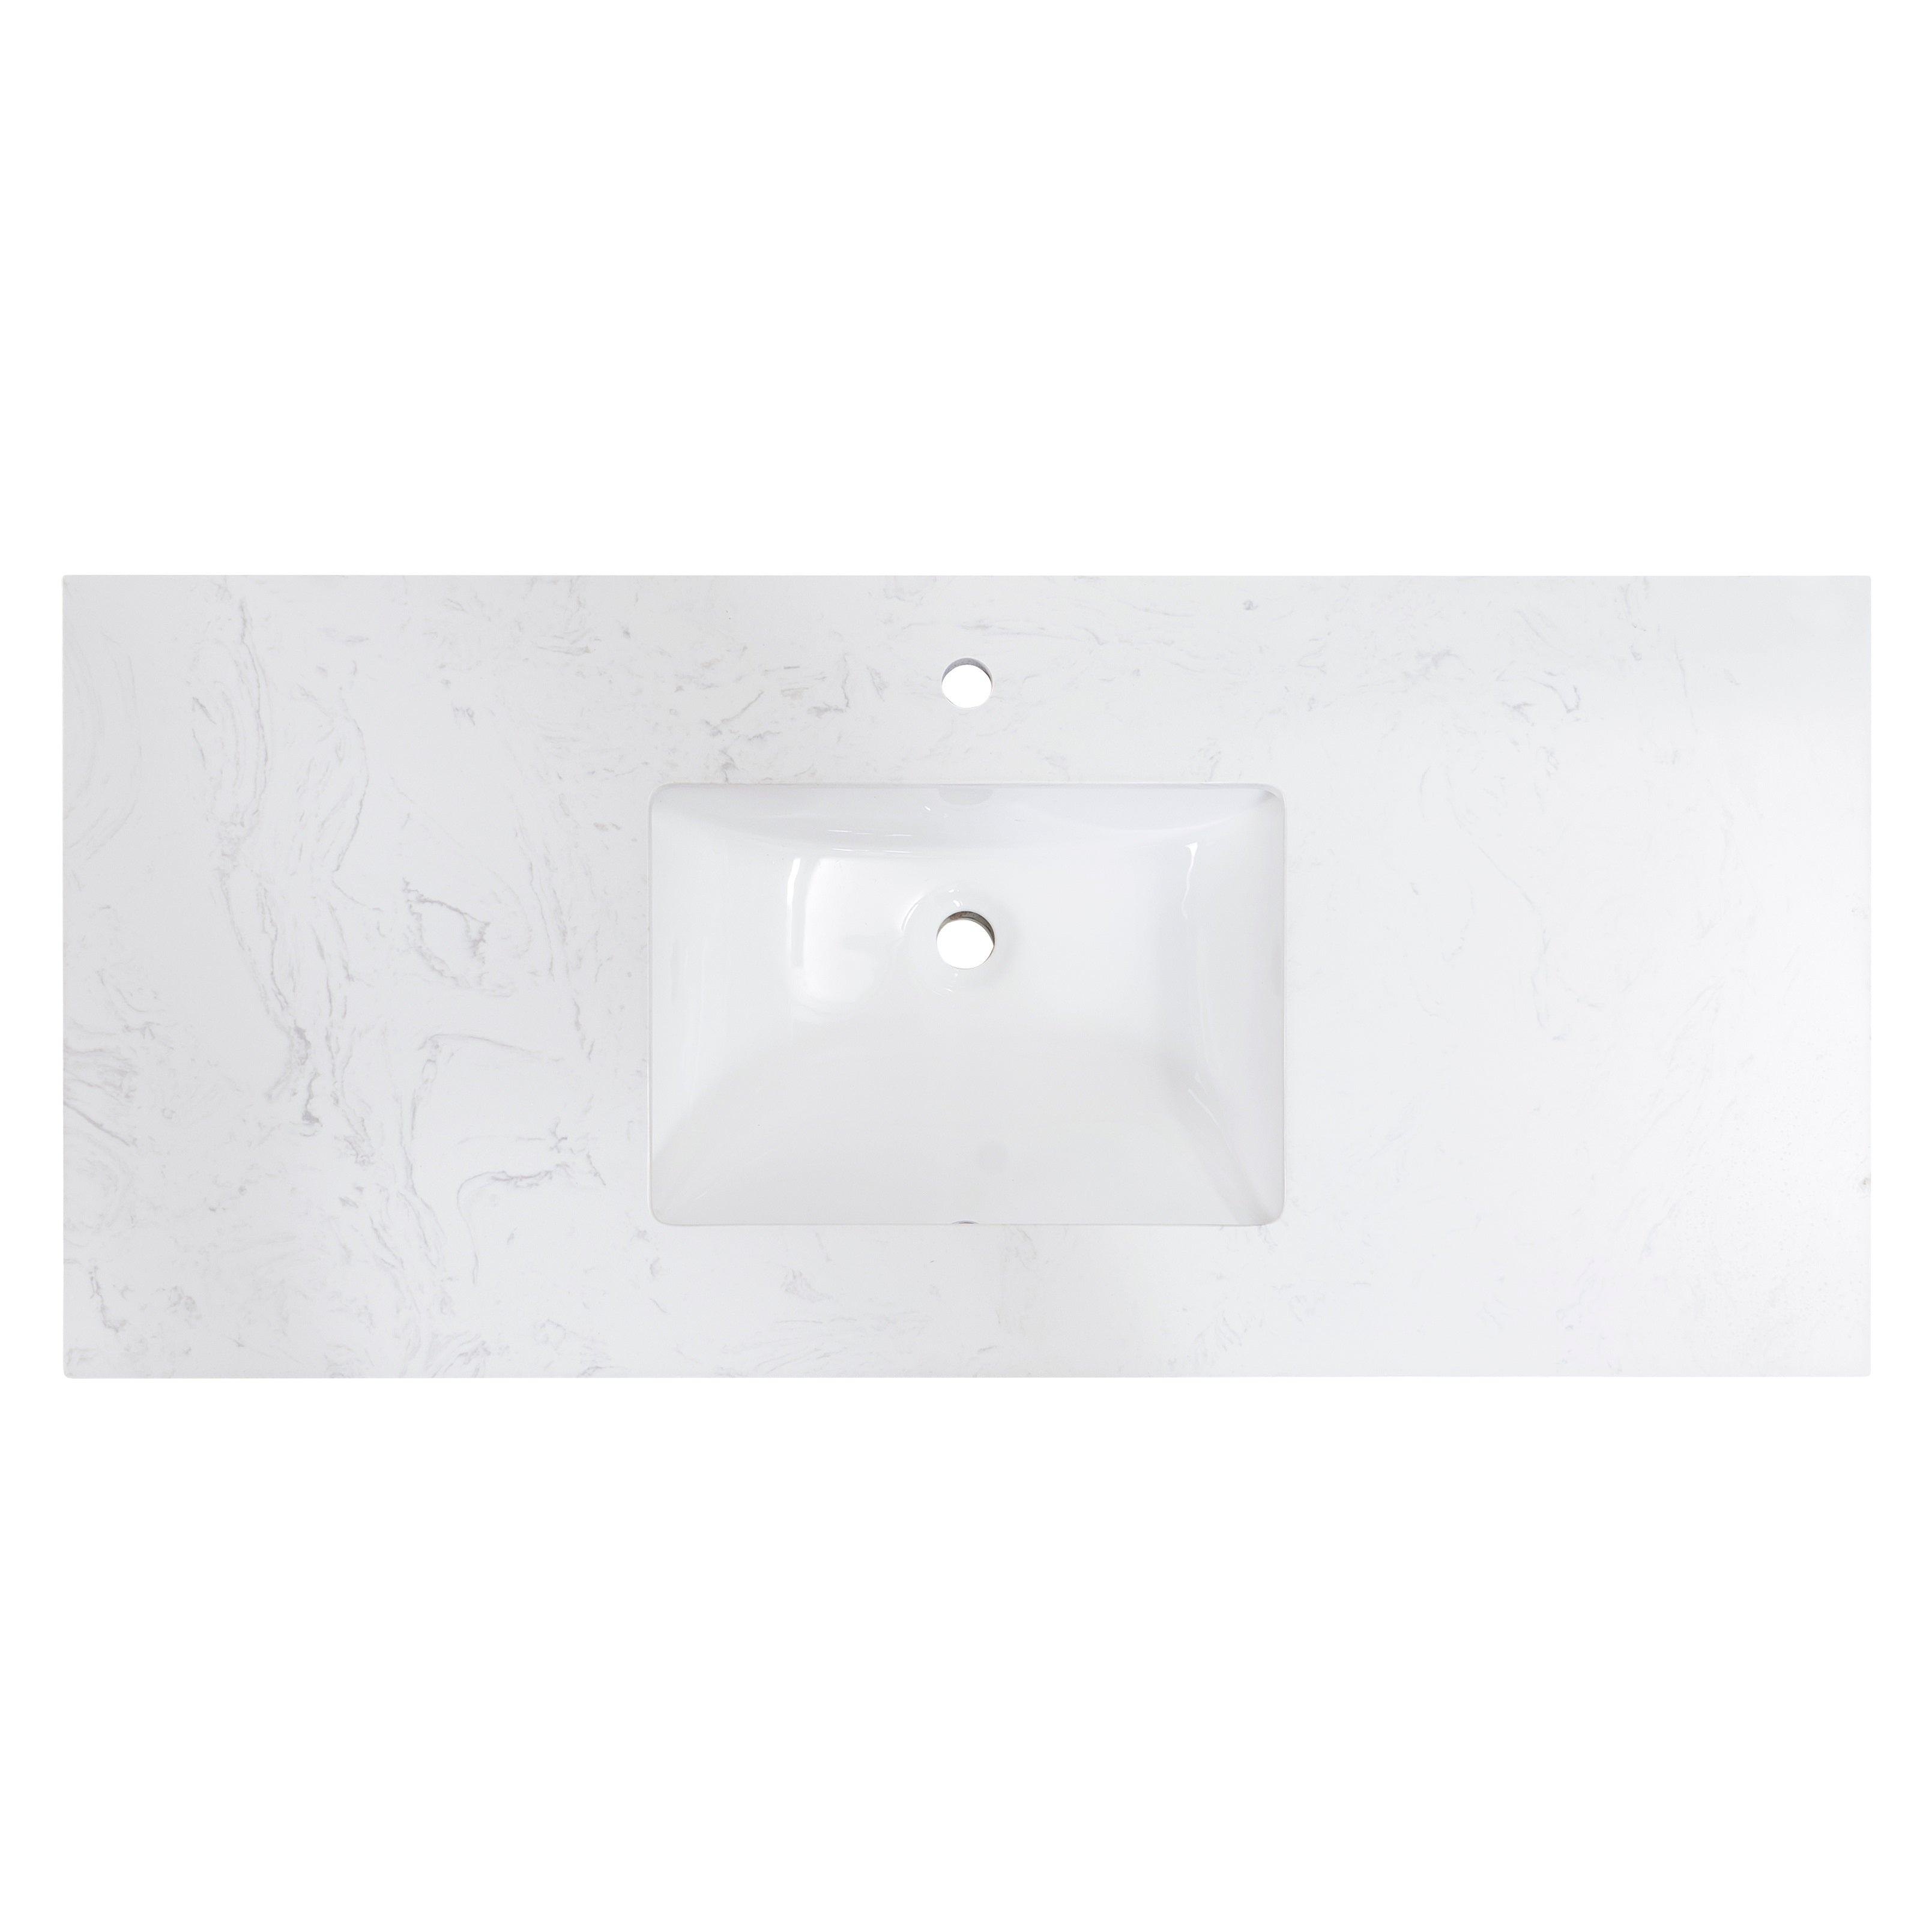 Salerno Single Sink Bathroom Vanity Countertop in Aosta White